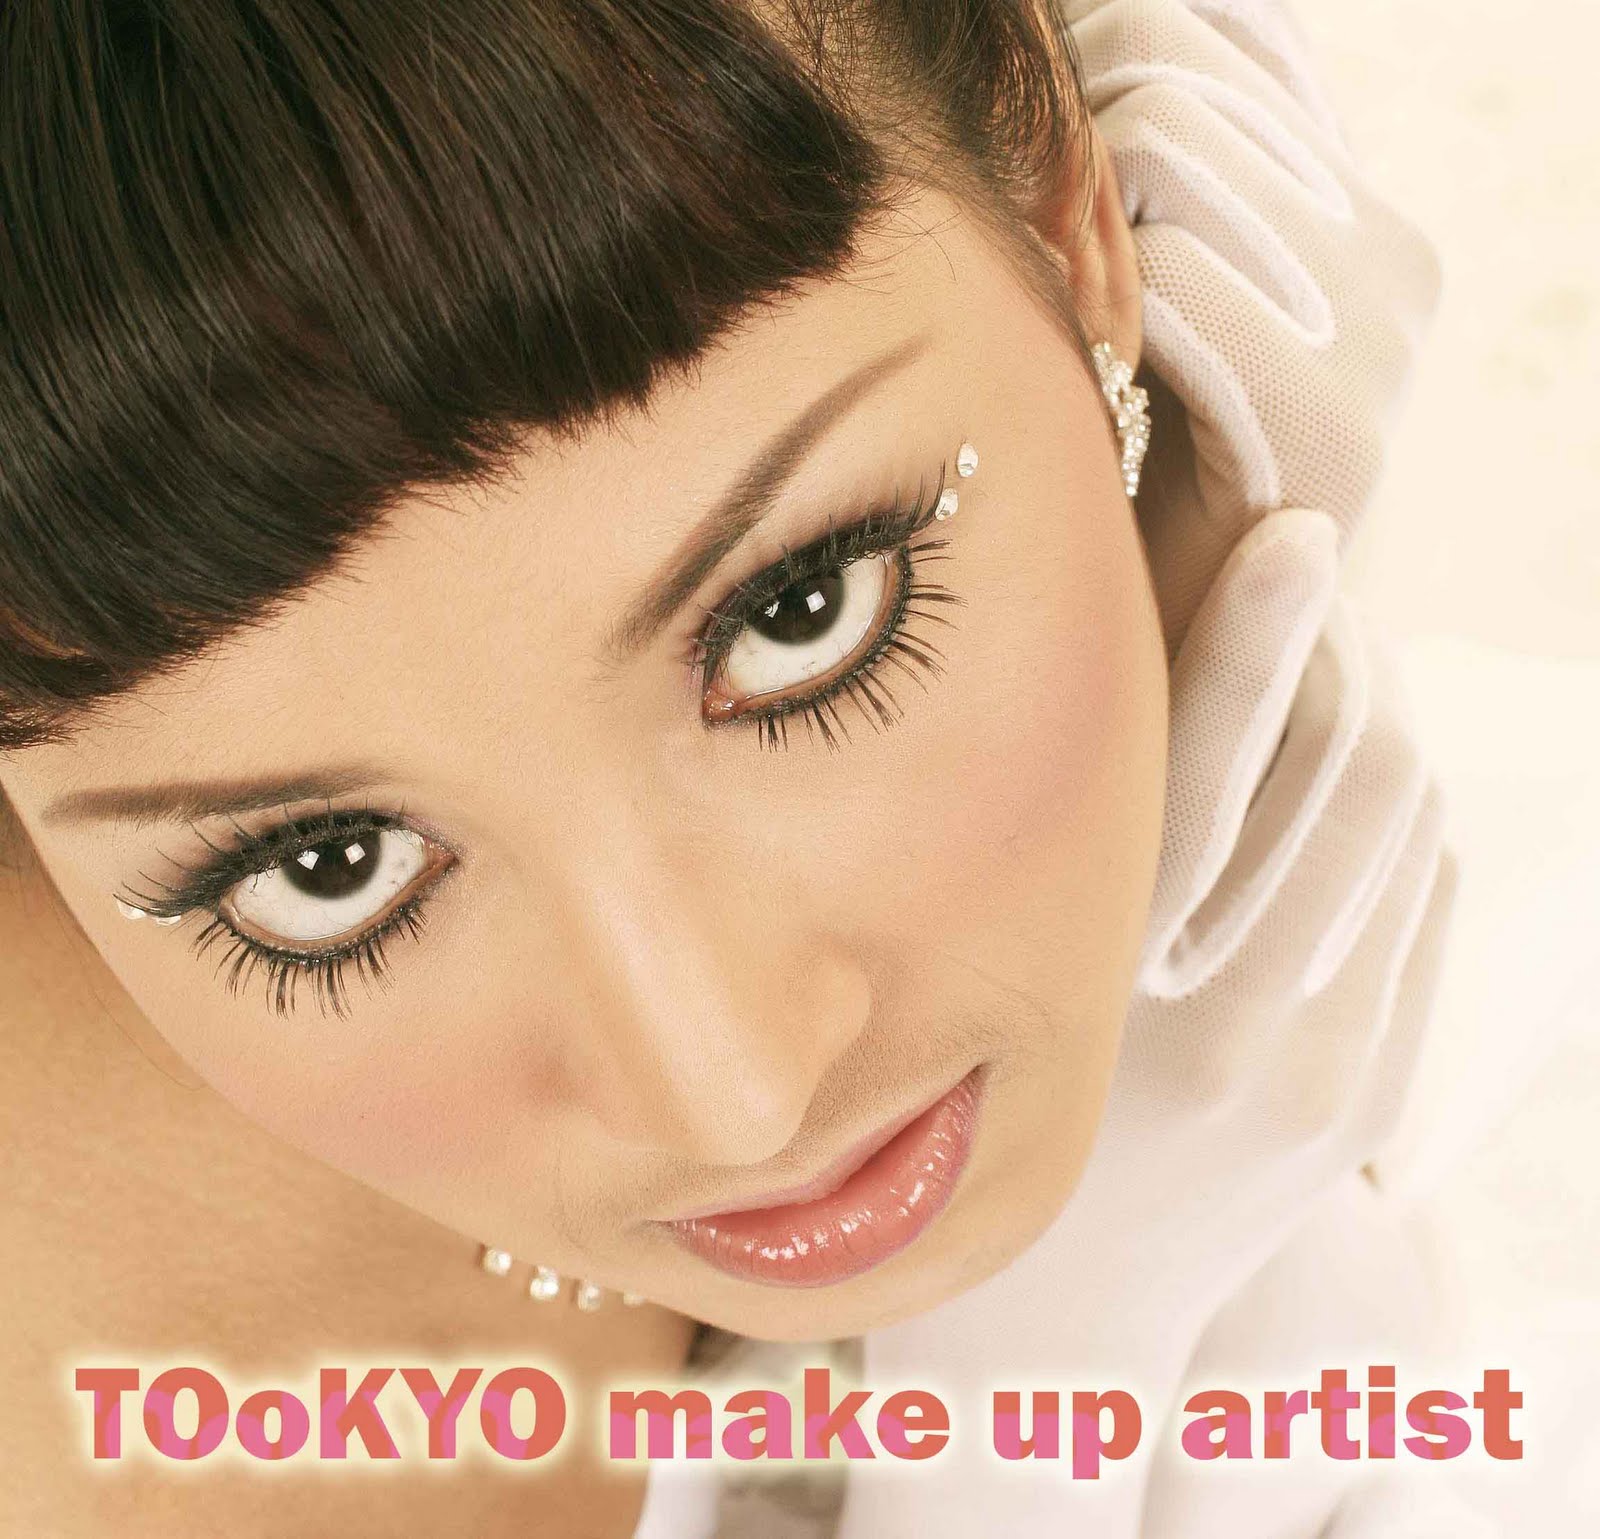 tookyo make up artist Mei 2011